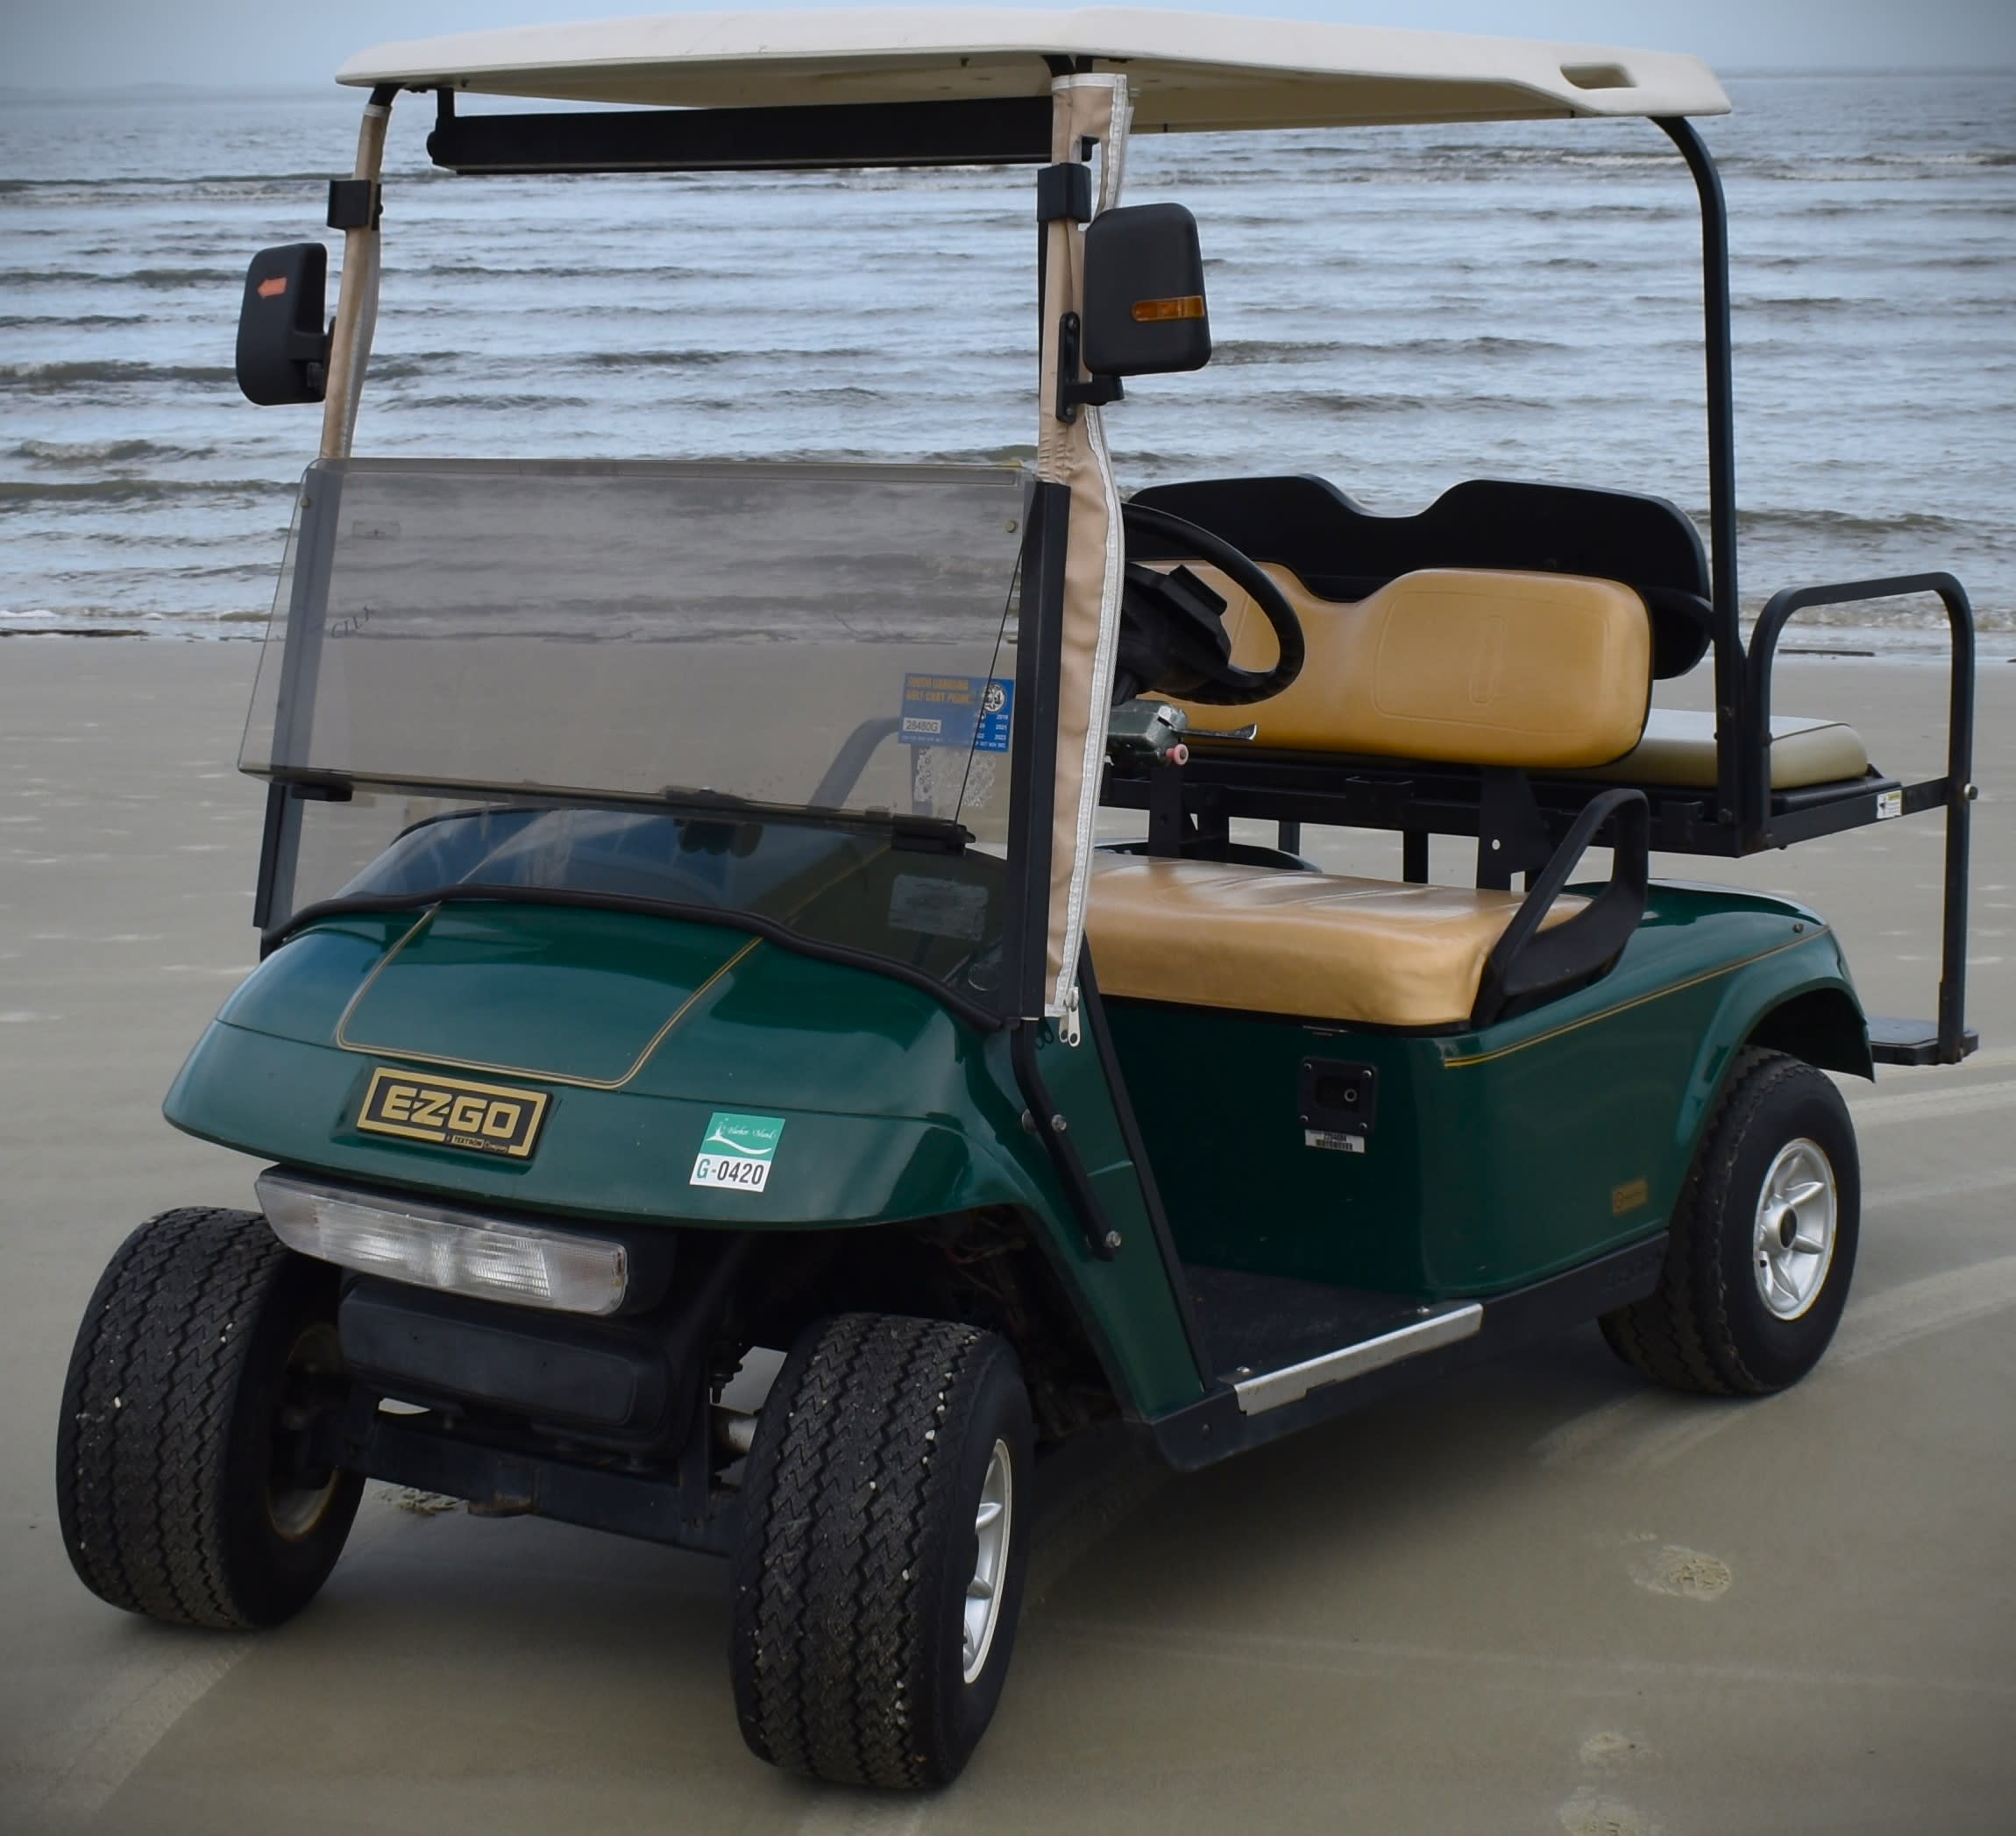 19+ Emerald Isle Golf Cart Rental